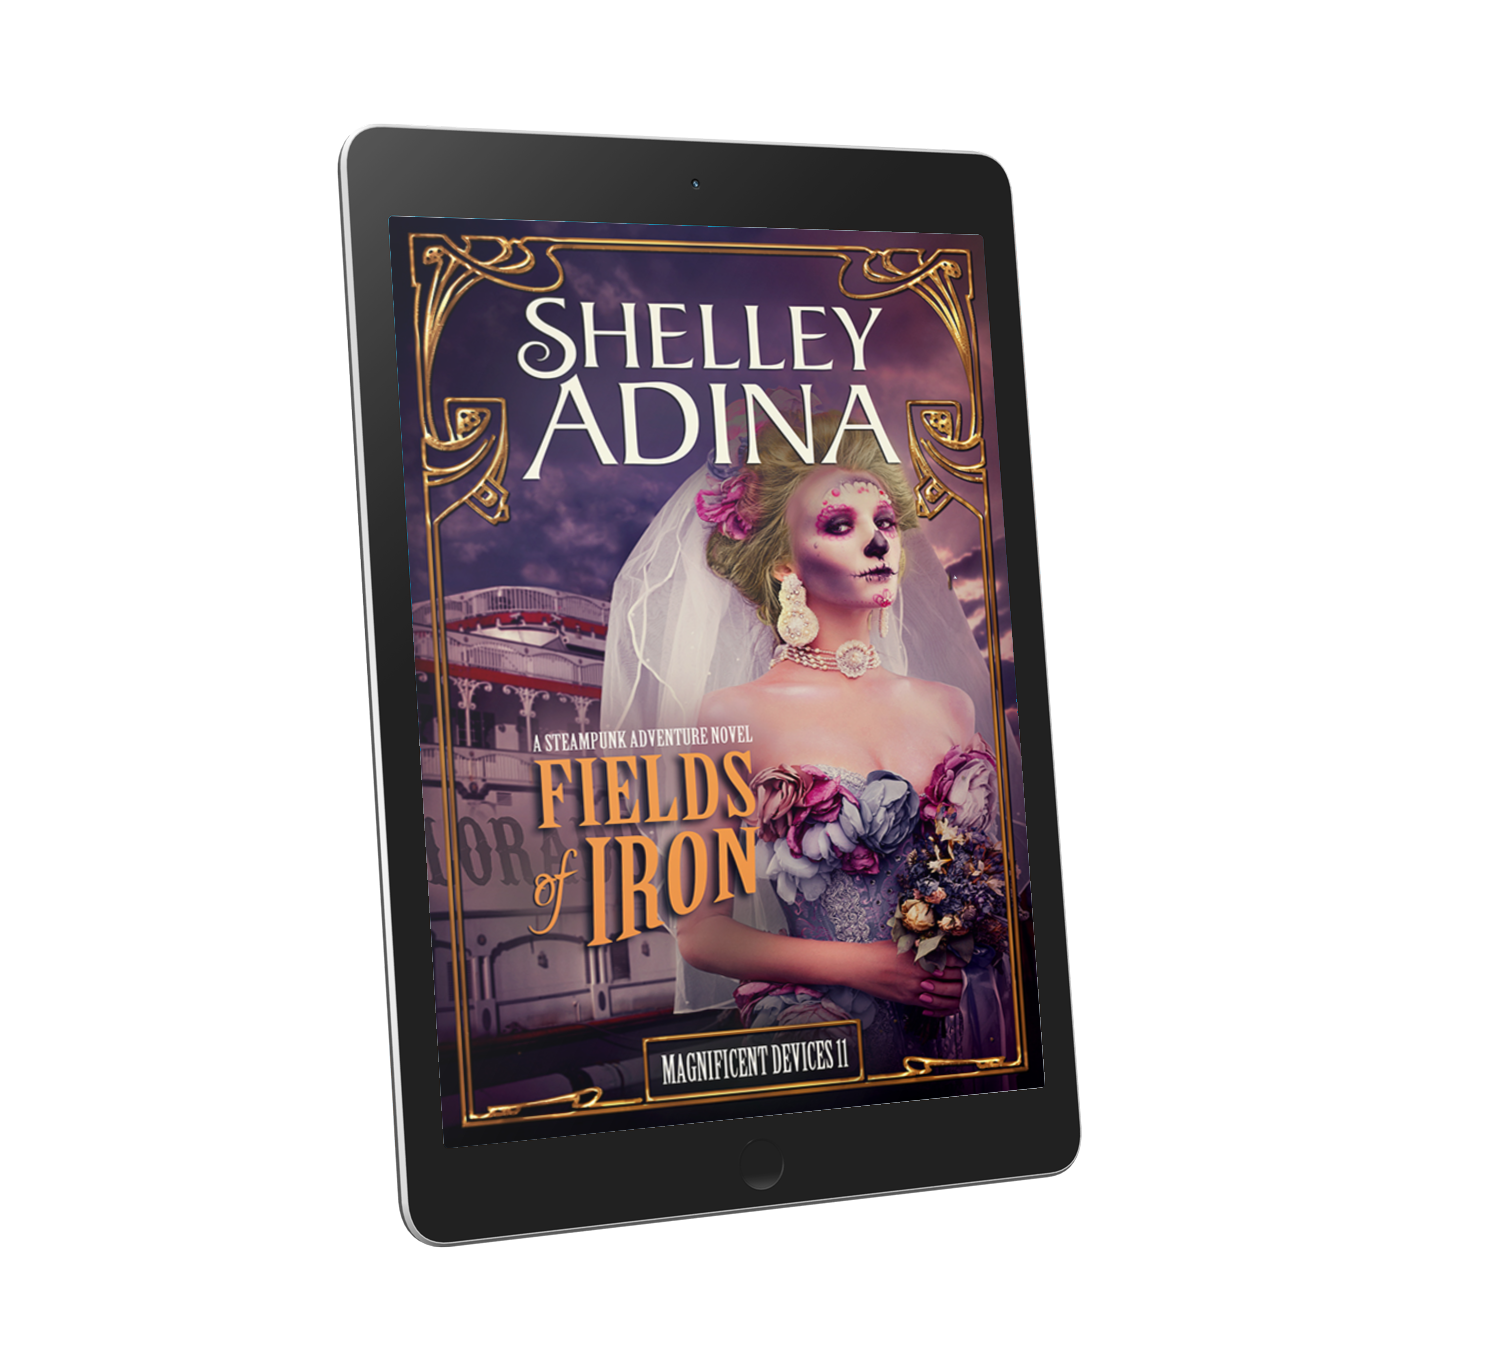 Fields of Iron, a steampunk adventure novel by Shelley Adina